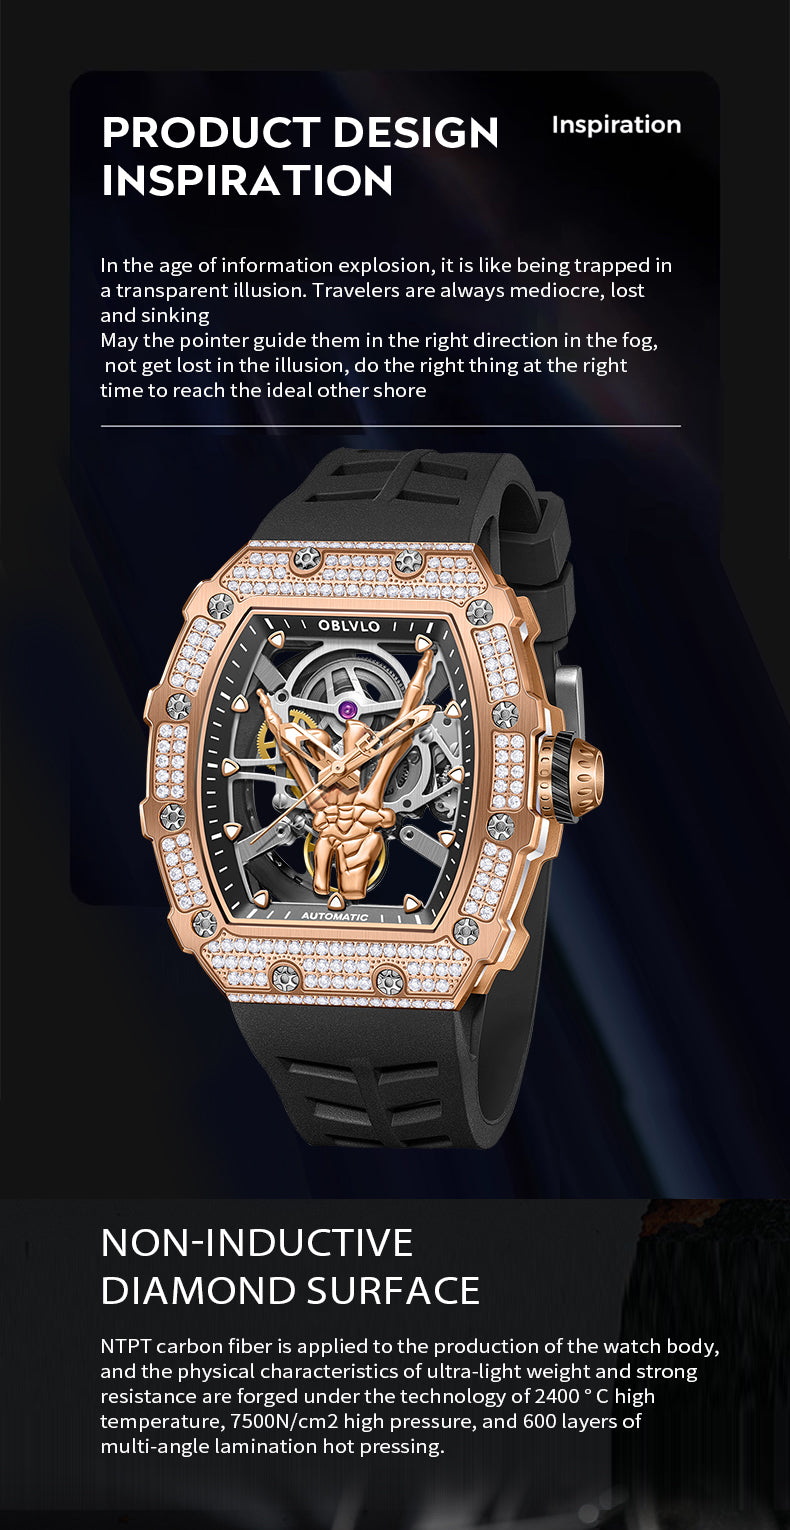 Luxury OBLVLO Rose Gold Diamond Skeleton Watches for Men and Women